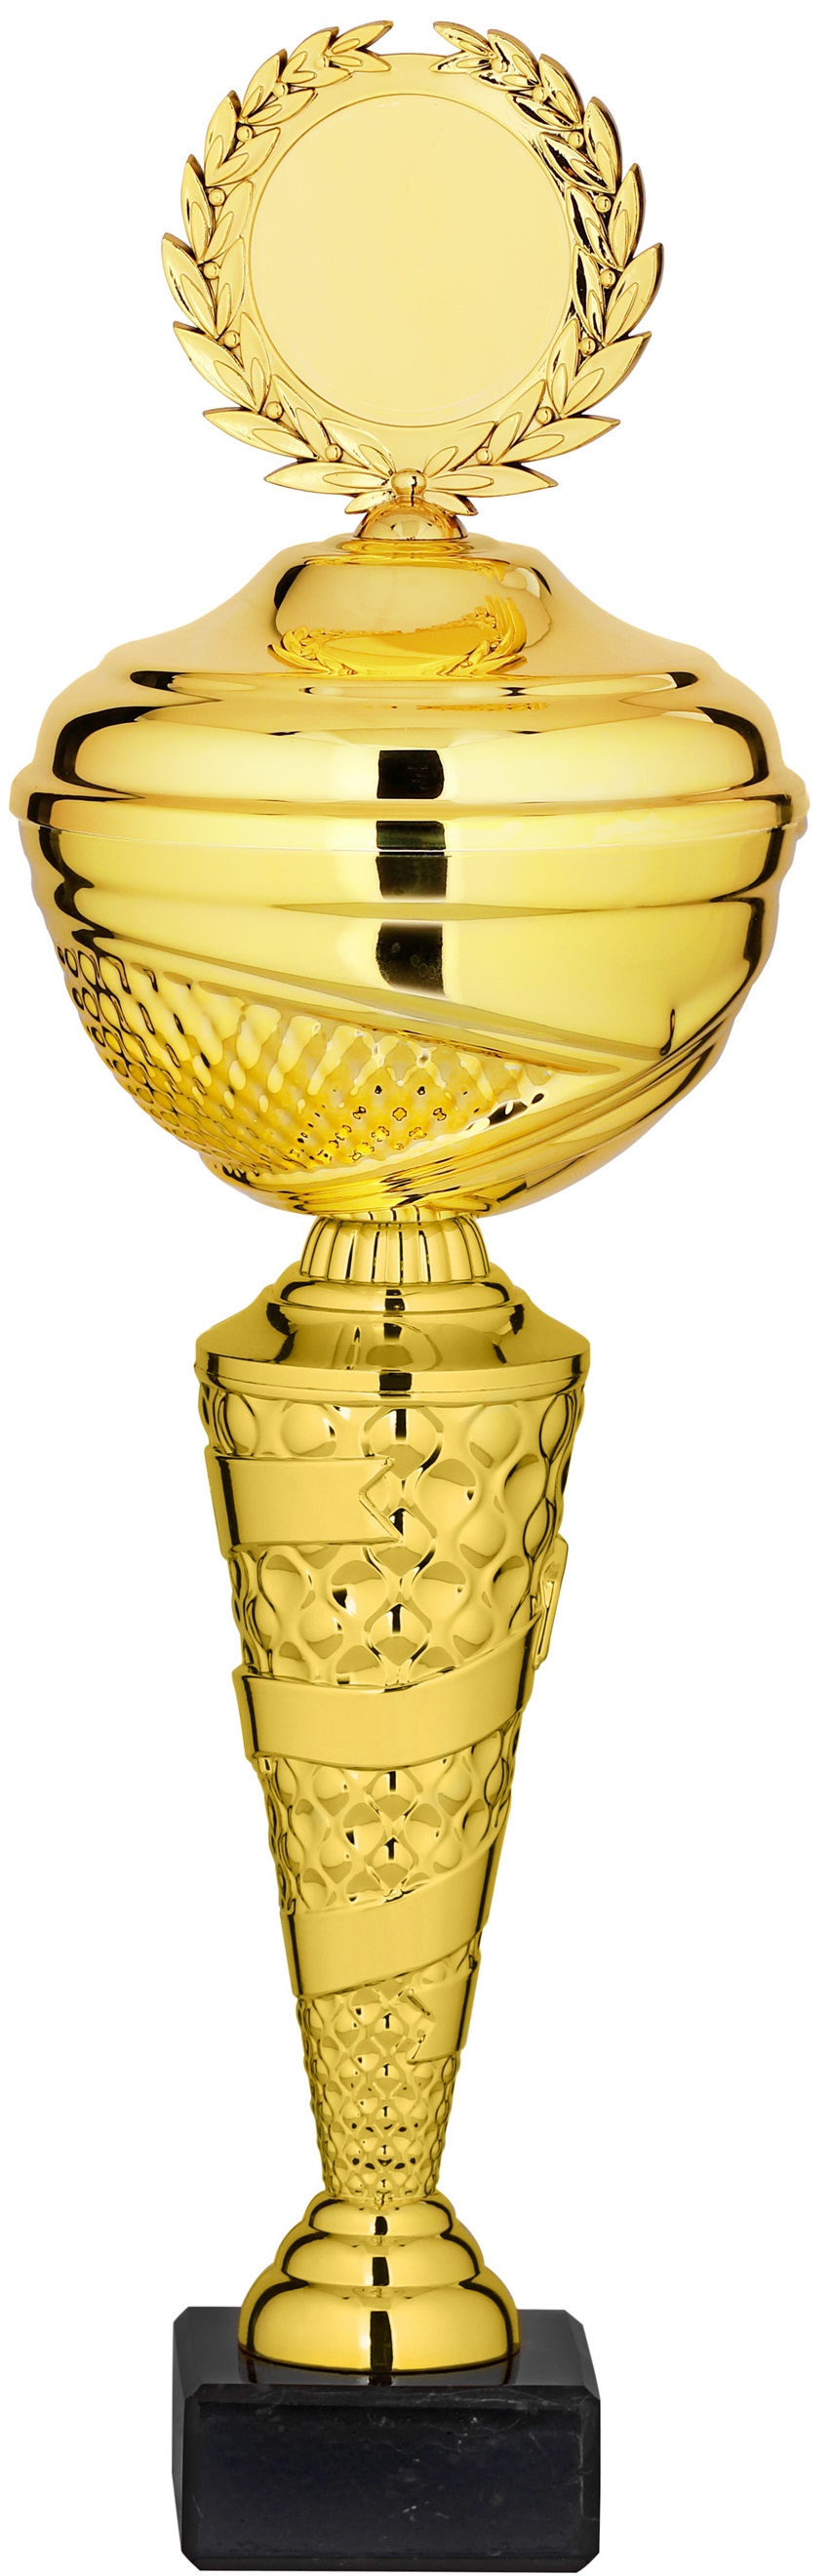 Pokal P600-Gold  inkl. Gravur und Emblem 39,5 cm